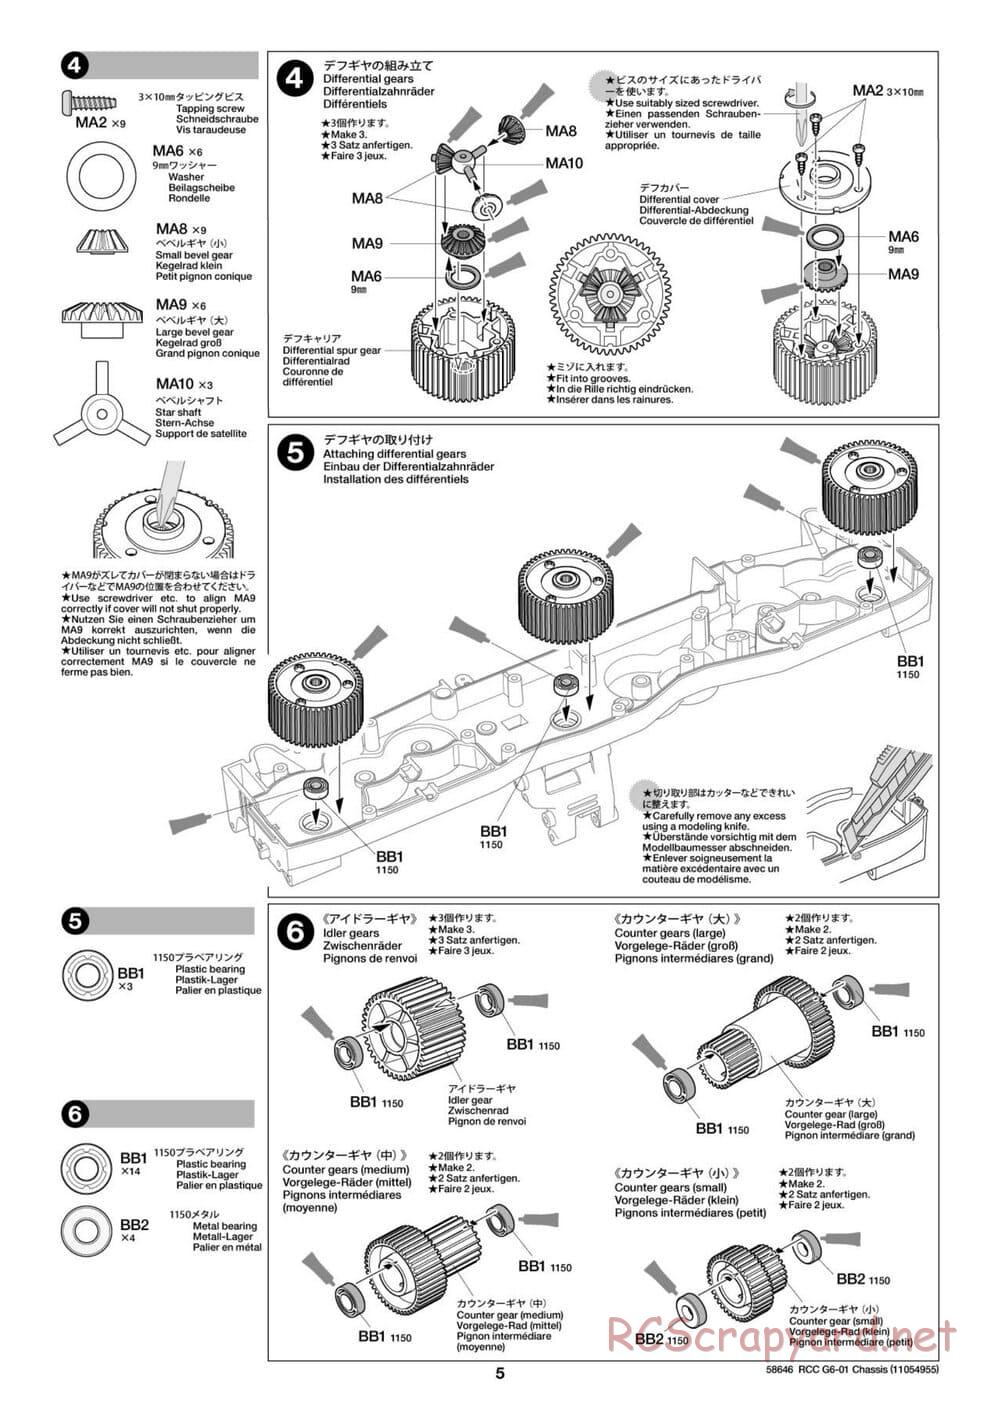 Tamiya - Konghead 6x6 - G6-01 Chassis - Manual - Page 5